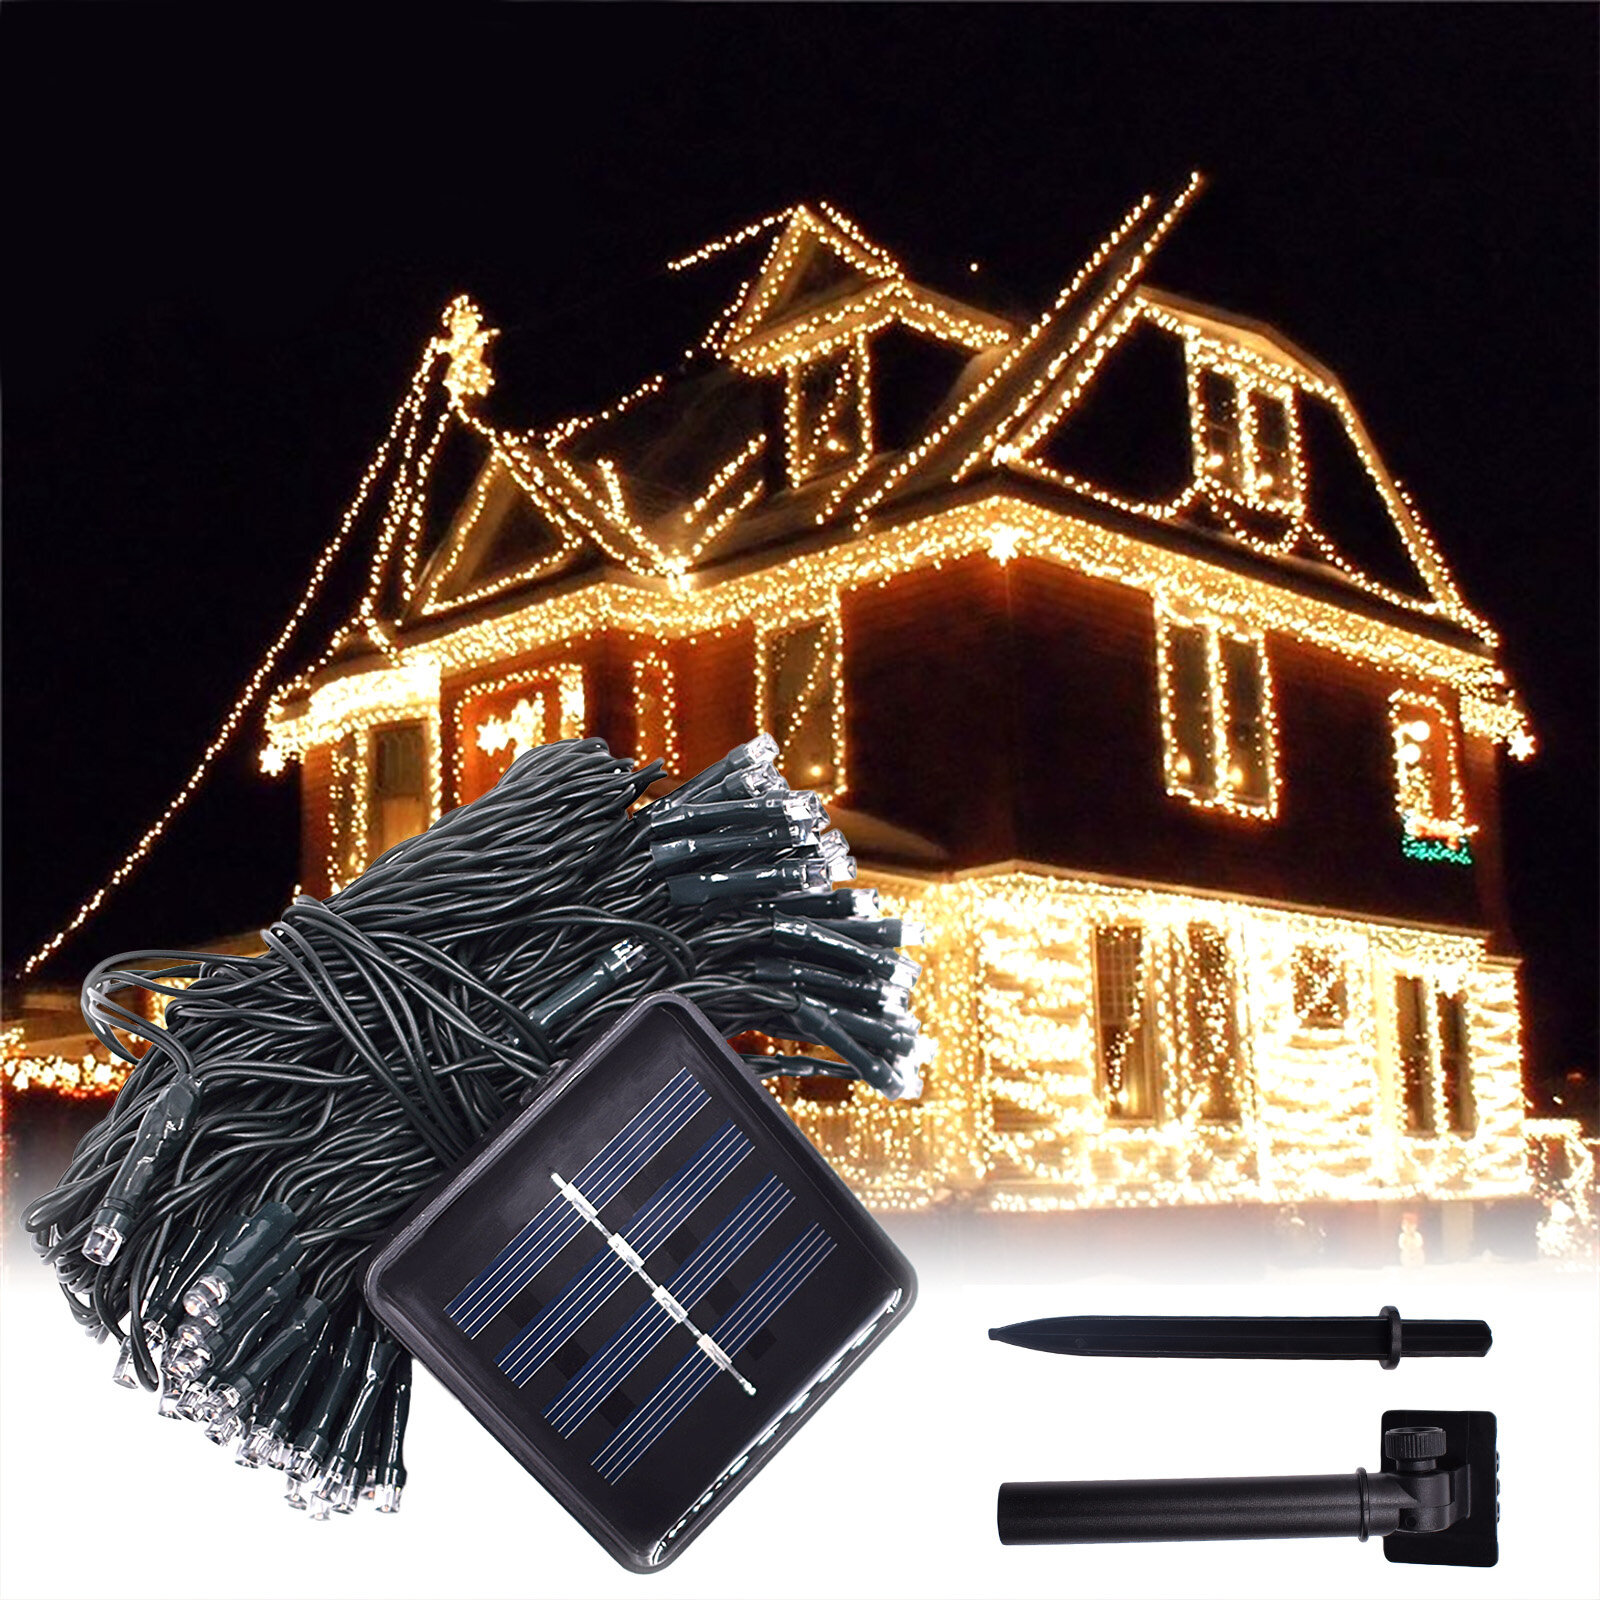 100 LED Solar Power String Fairy Light Garden Christmas Outdoor Party Decor US